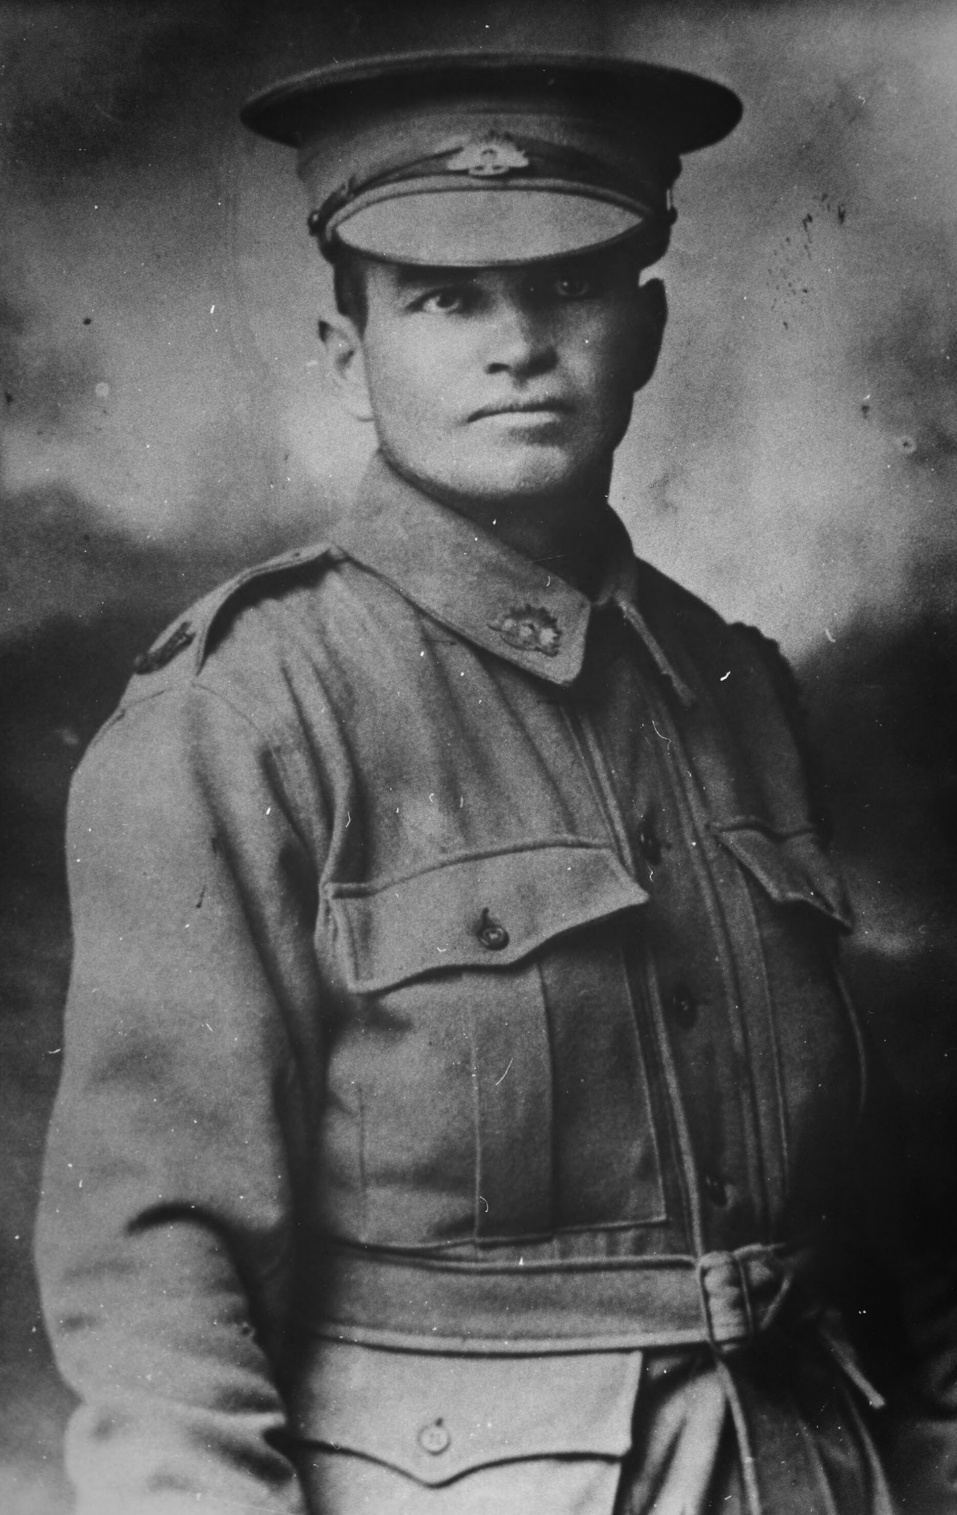 Adventurer Harold Lasseter in Australian Army uniform